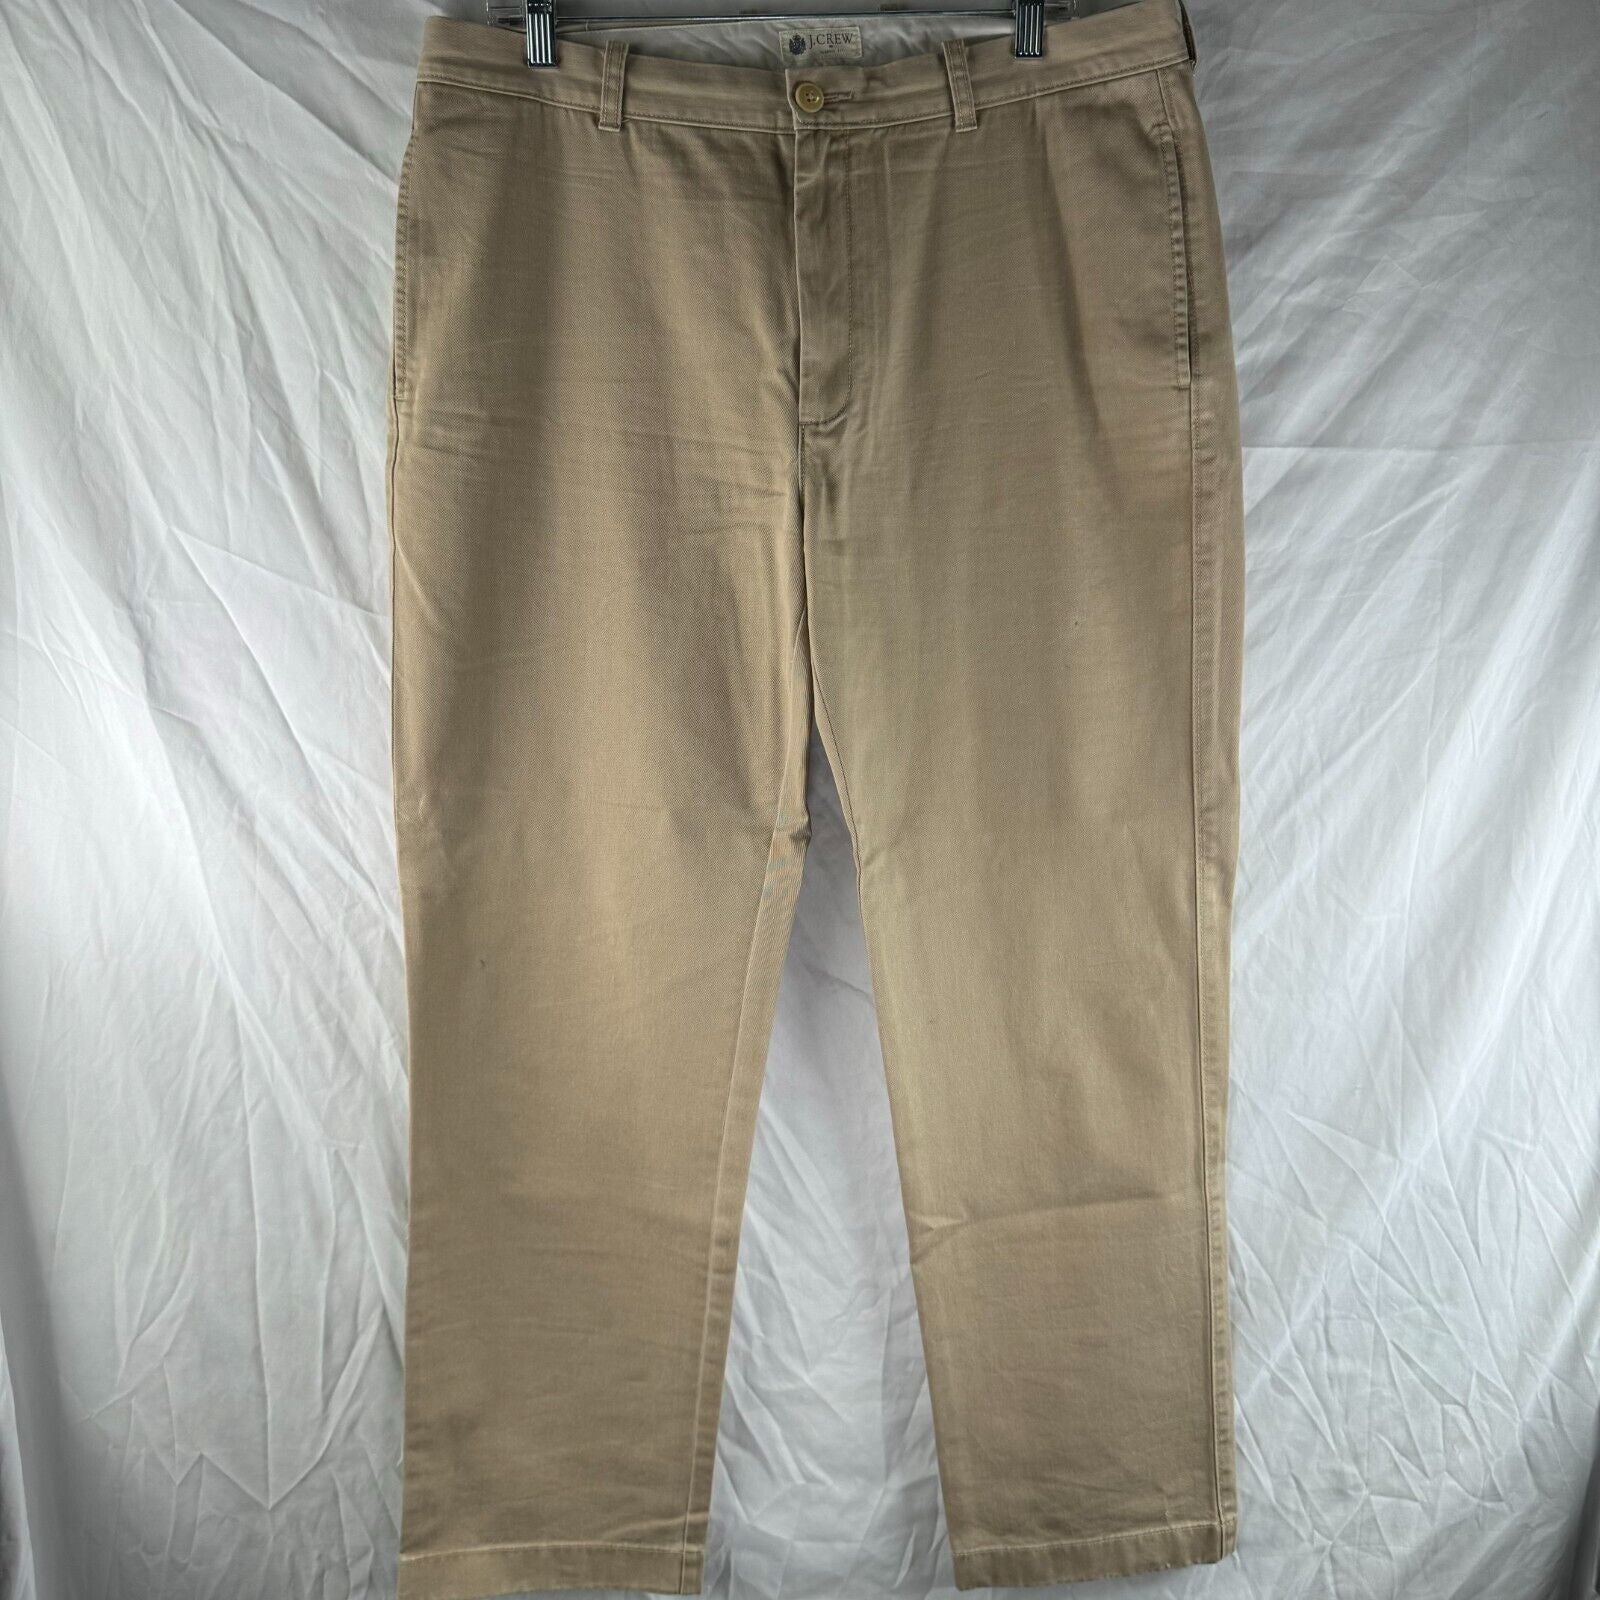 J Crew Flat Front Classic Fit Khaki Chino Pants Mens Size 36x30